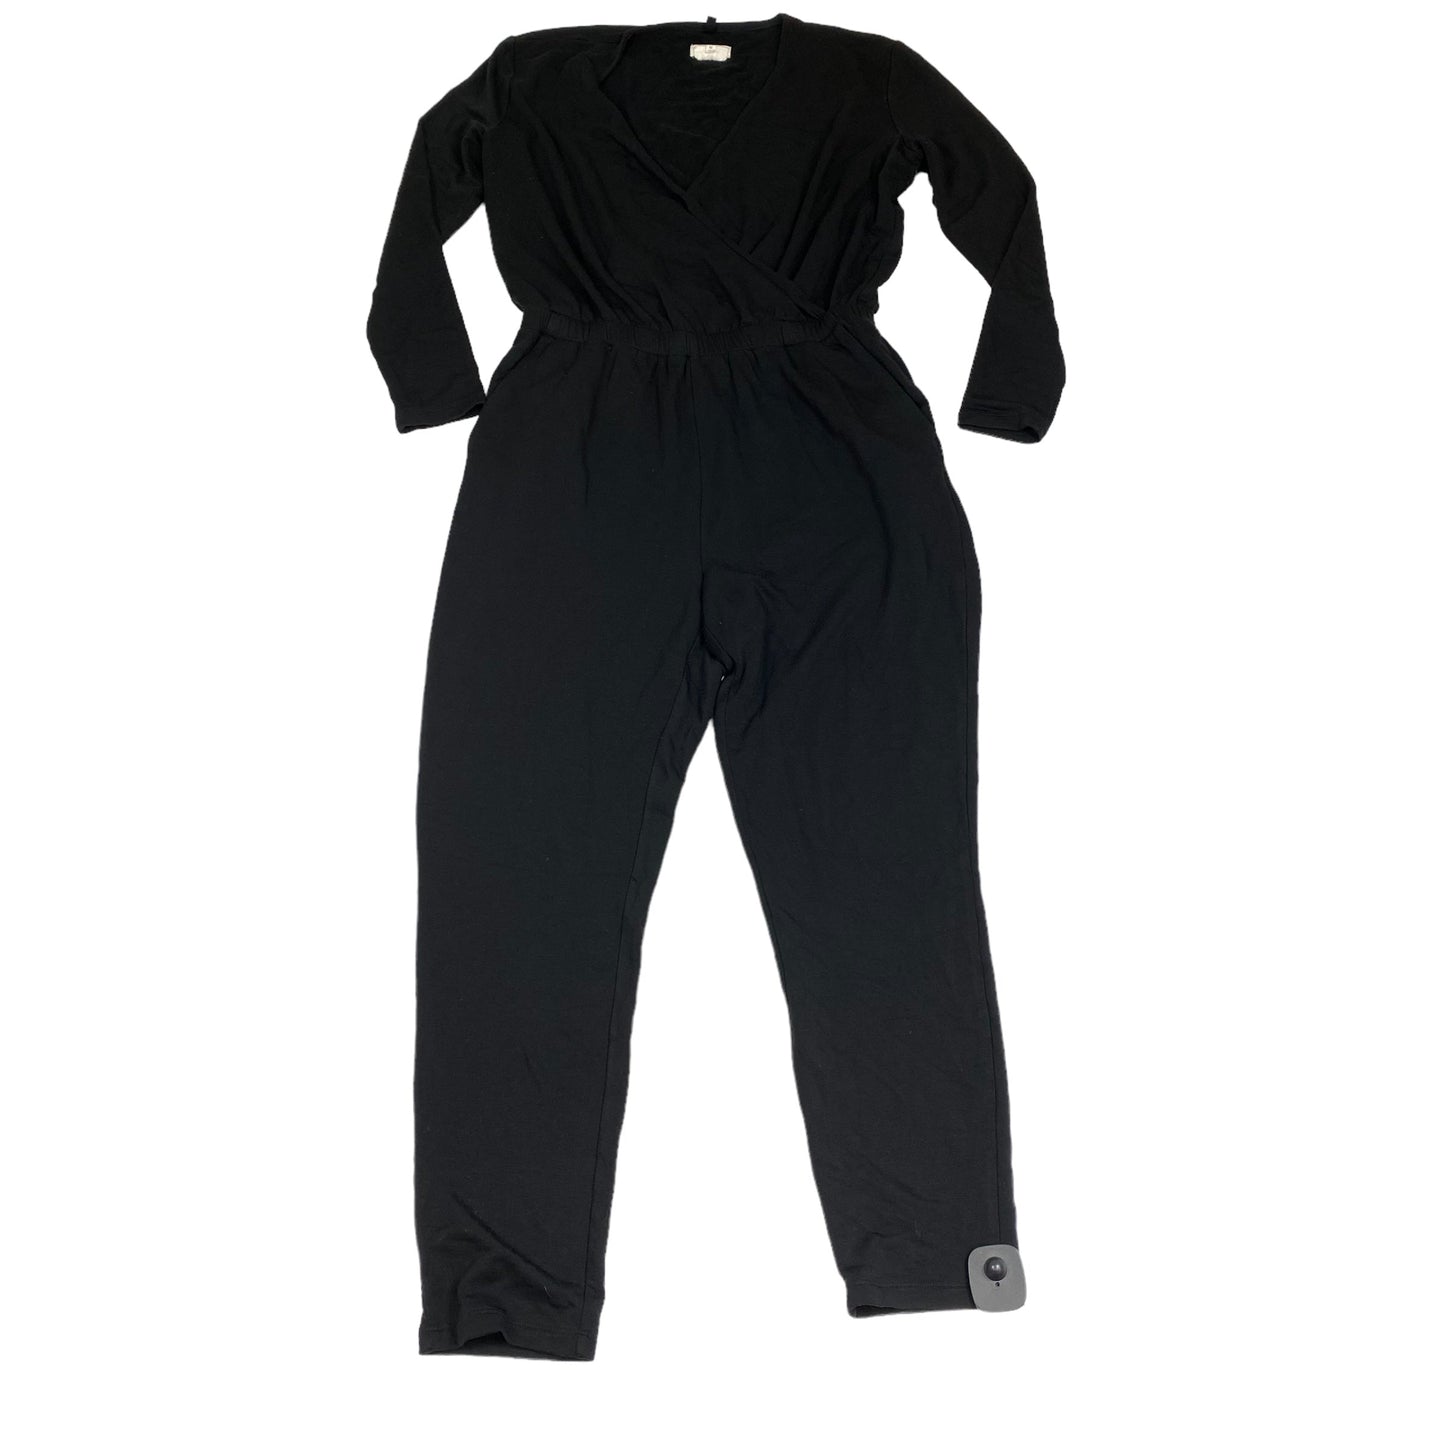 Black Jumpsuit Lou And Grey, Size M